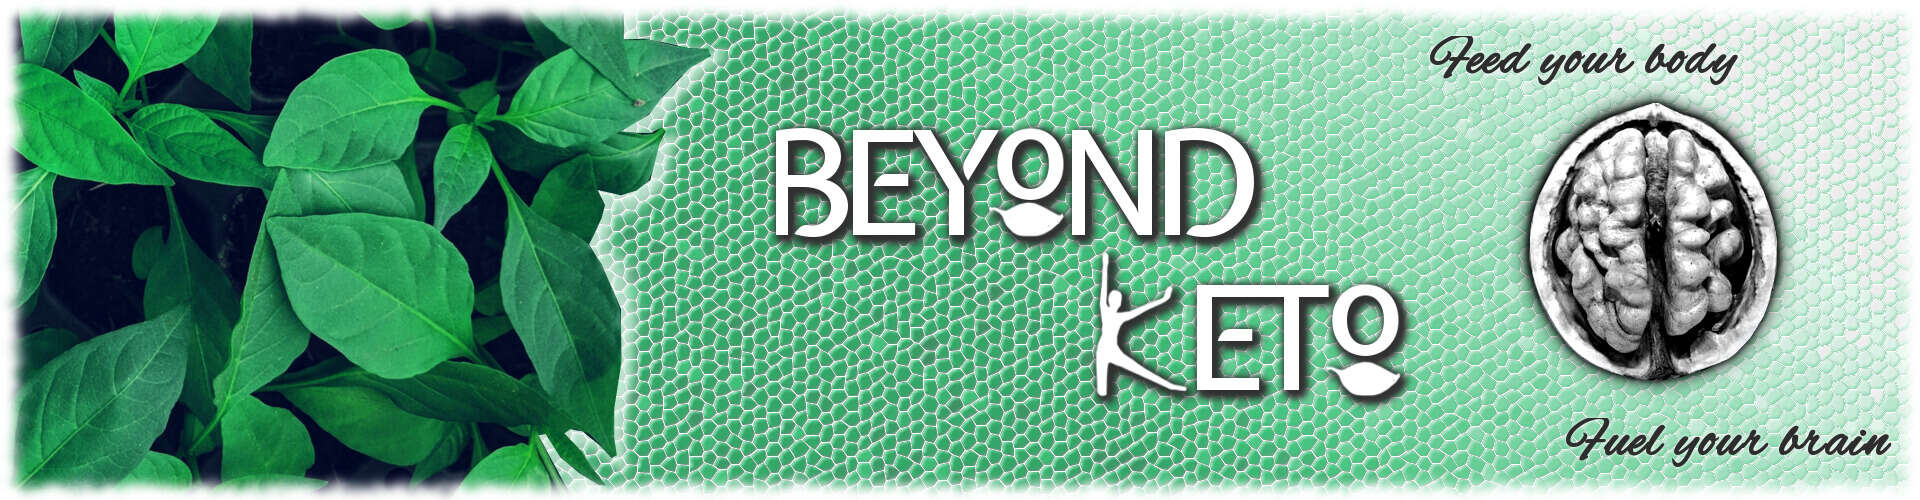 Beyond Keto main banner